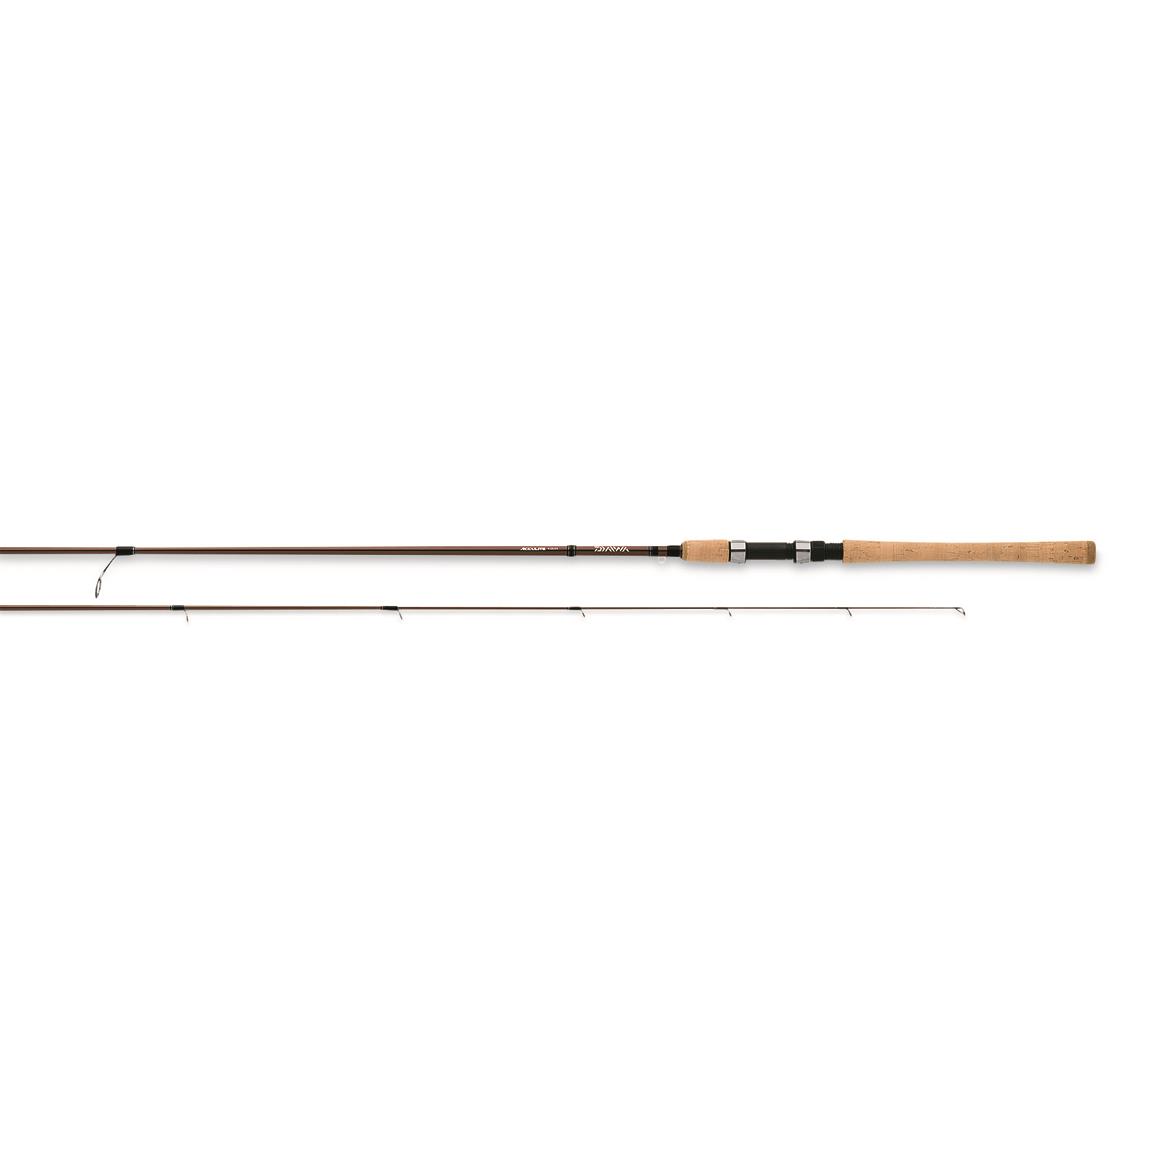 Daiwa Acculite Salmon/Trout/Steelhead Spinning Rod, 8'6" Length, Medium Light Power, Fast Action